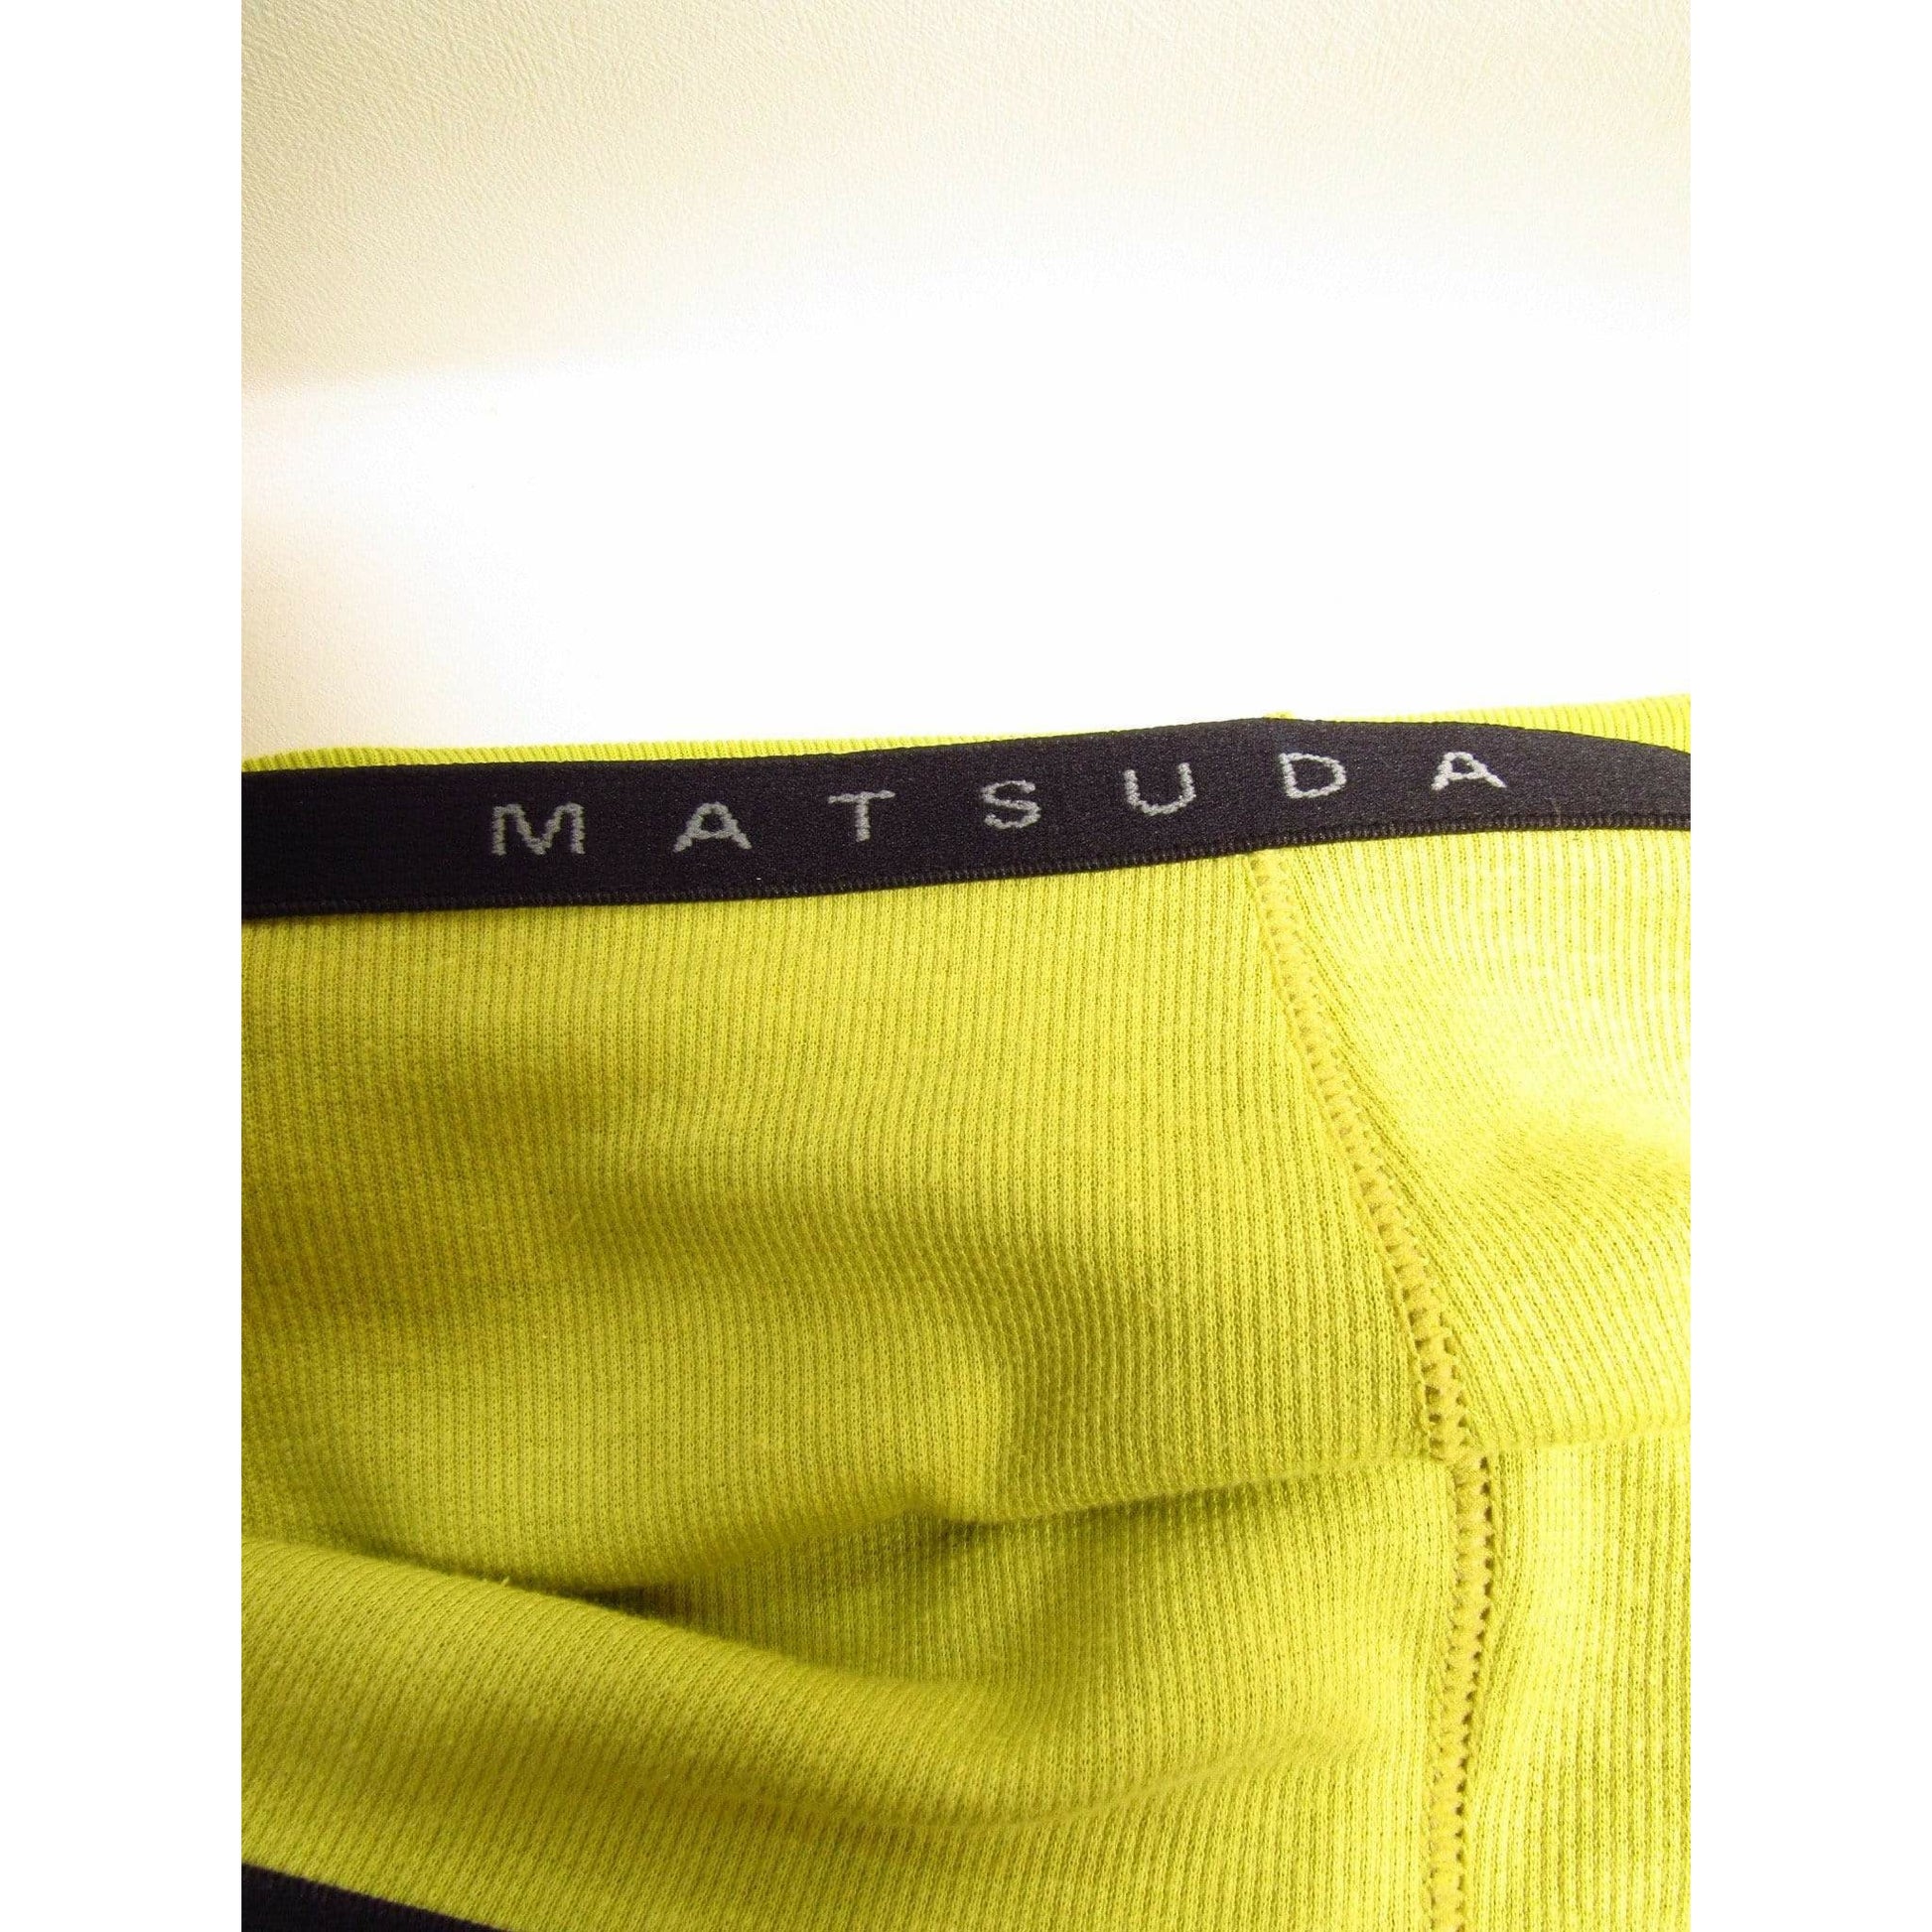 Pants matsuda-vintage-chartreuse-stretch-pant Matsuda Goldenrod